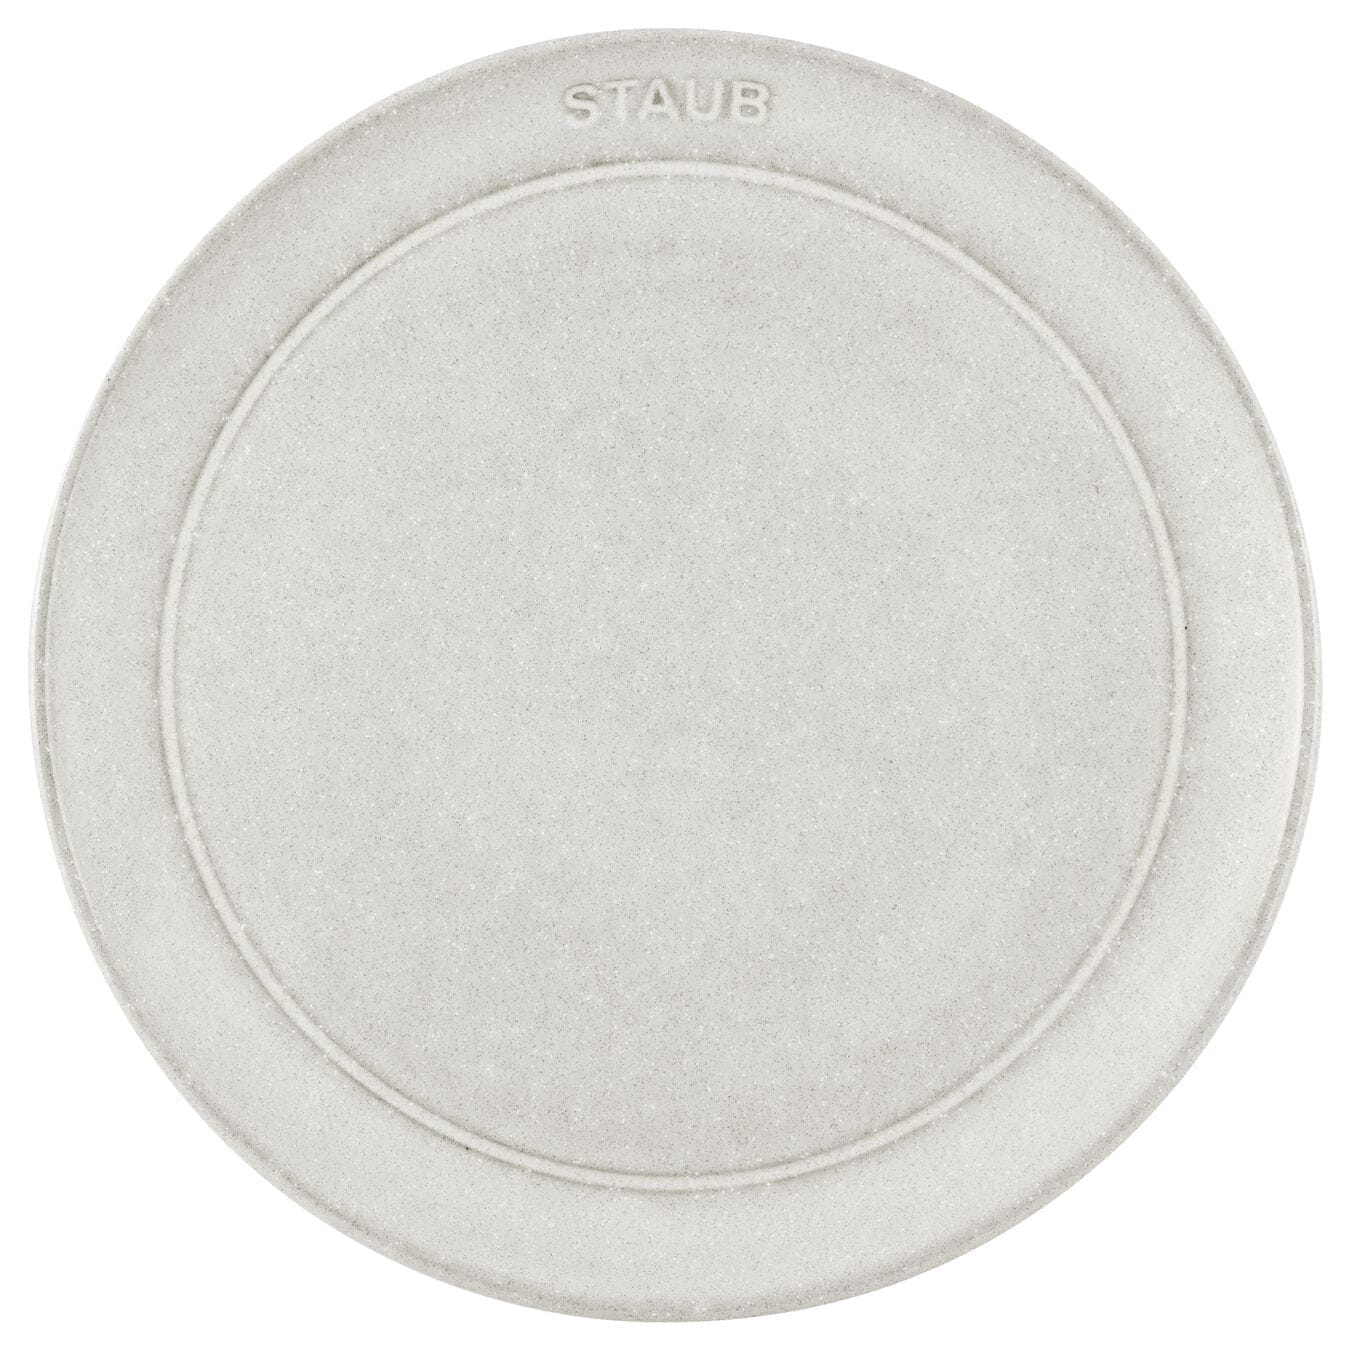 Staub Dining Line Keramik Teller Ø 20 cm Weißer Trüffel